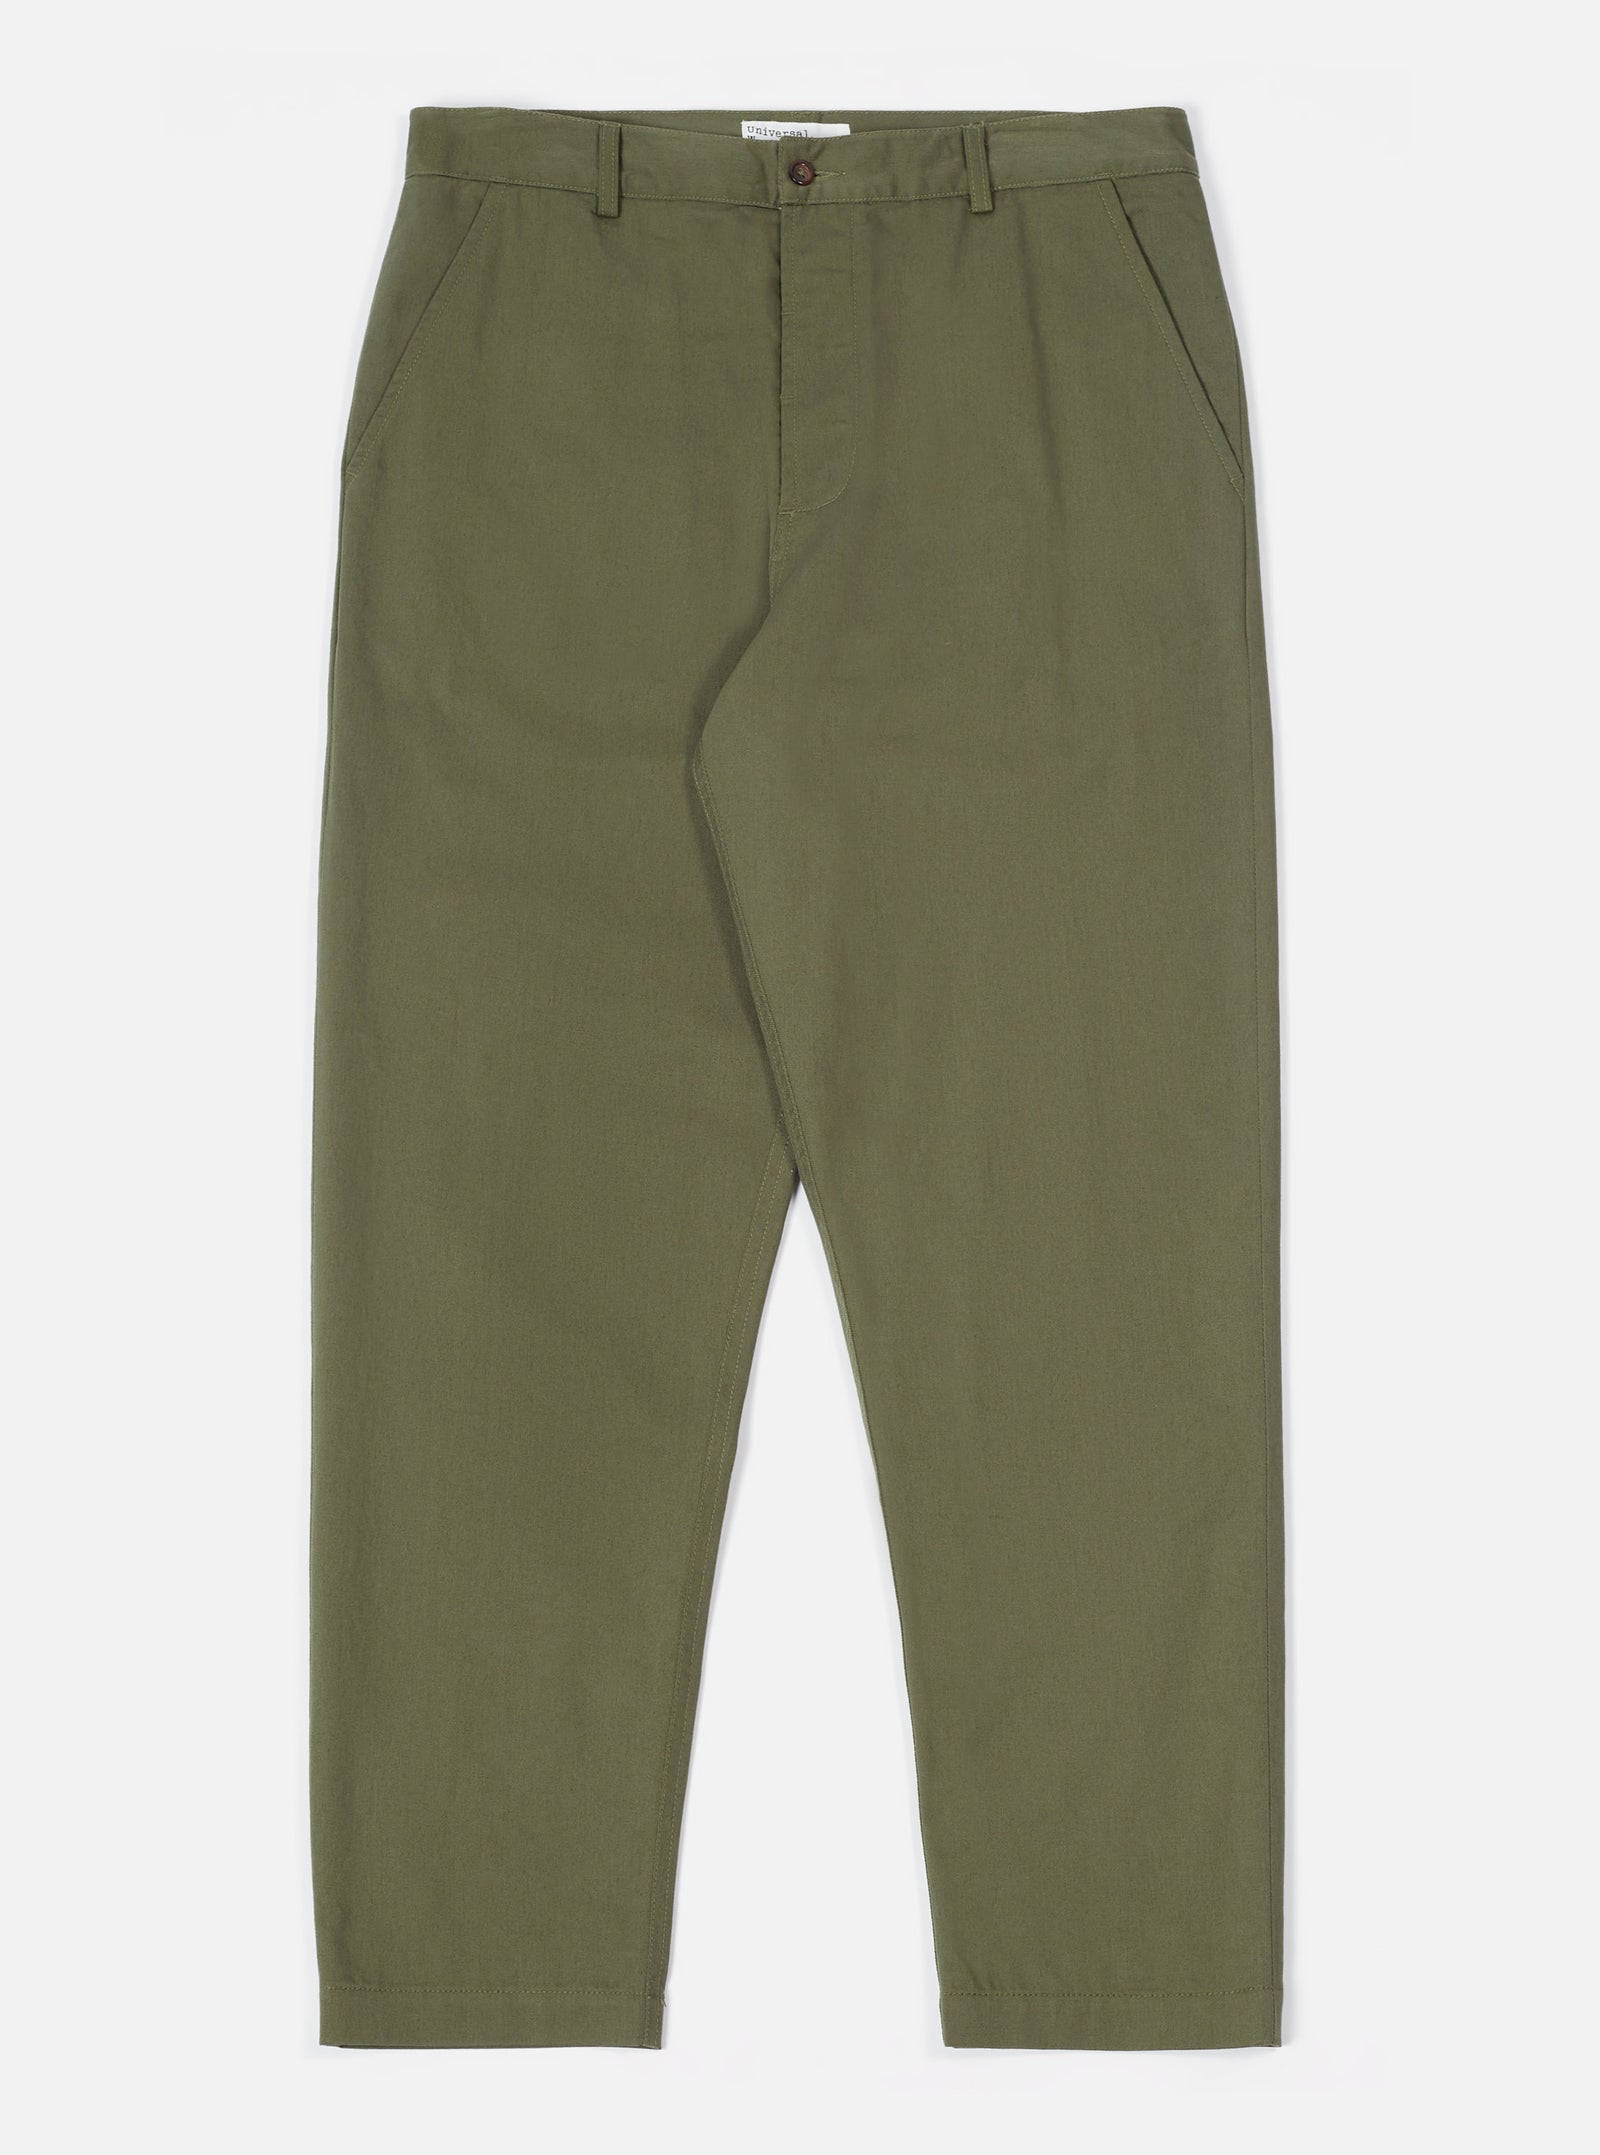 Womens LL Bean Light Olive Green Pants Size 8  eBay